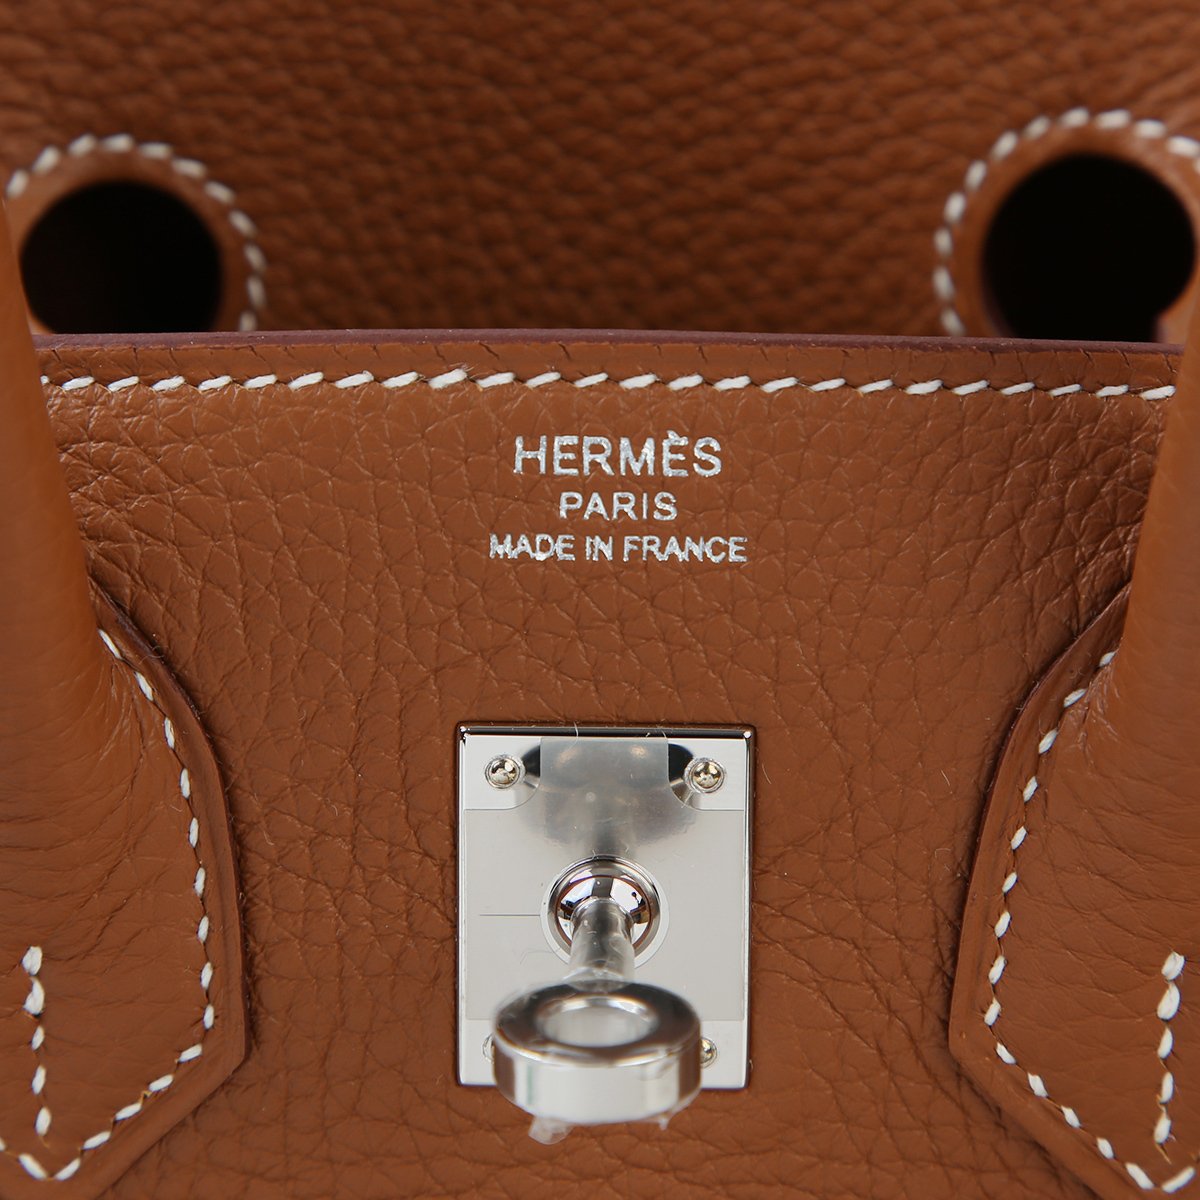 Hermès Birkin 25 Togo Leather Handbag In Dubai, Dubai, United Arab Emirates  For Sale (13369050)